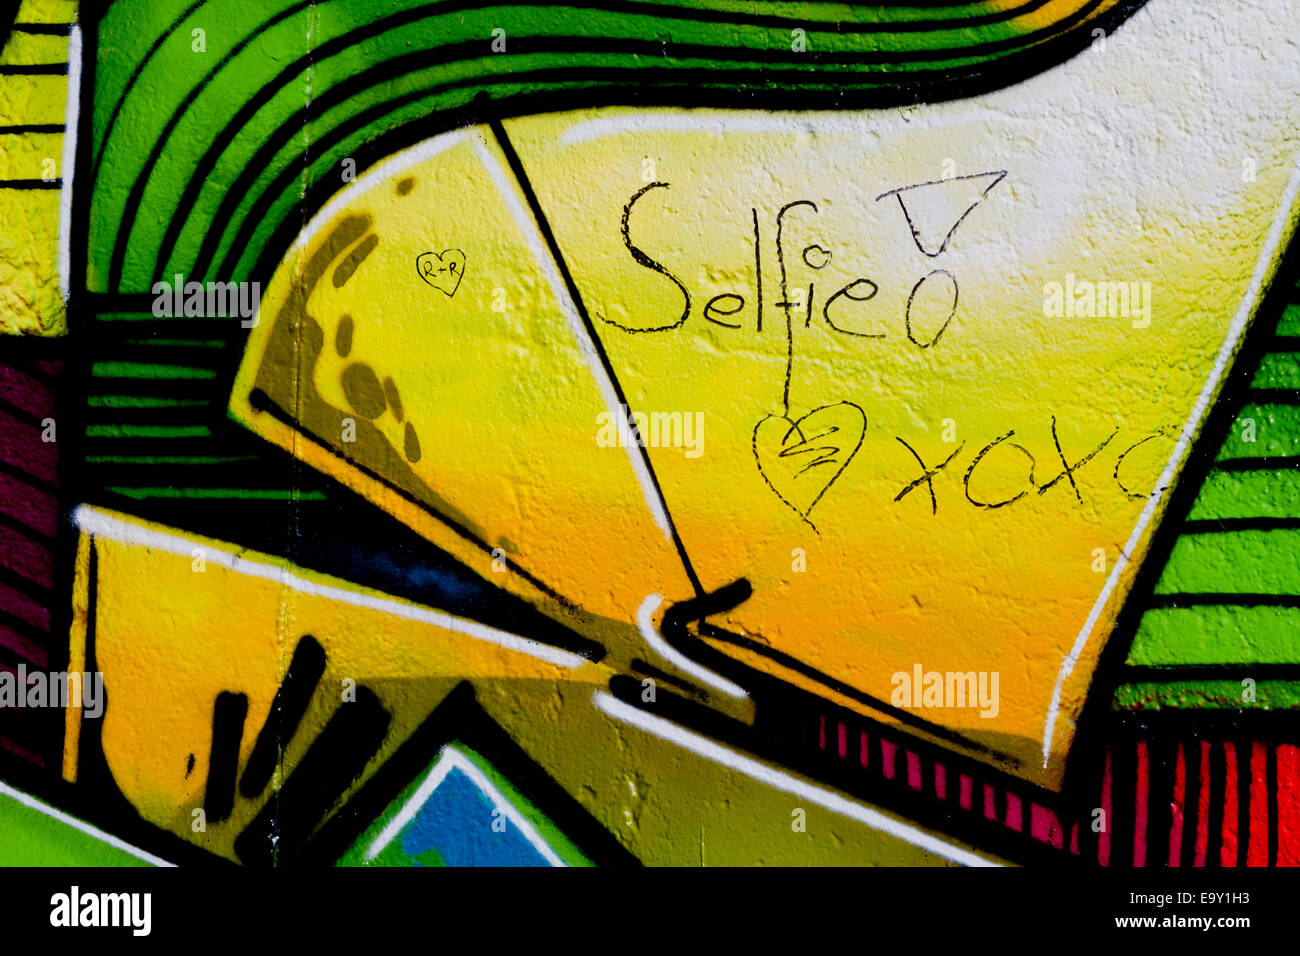 Berlin wall graffiti colourful selfie kisses heart Stock Photo